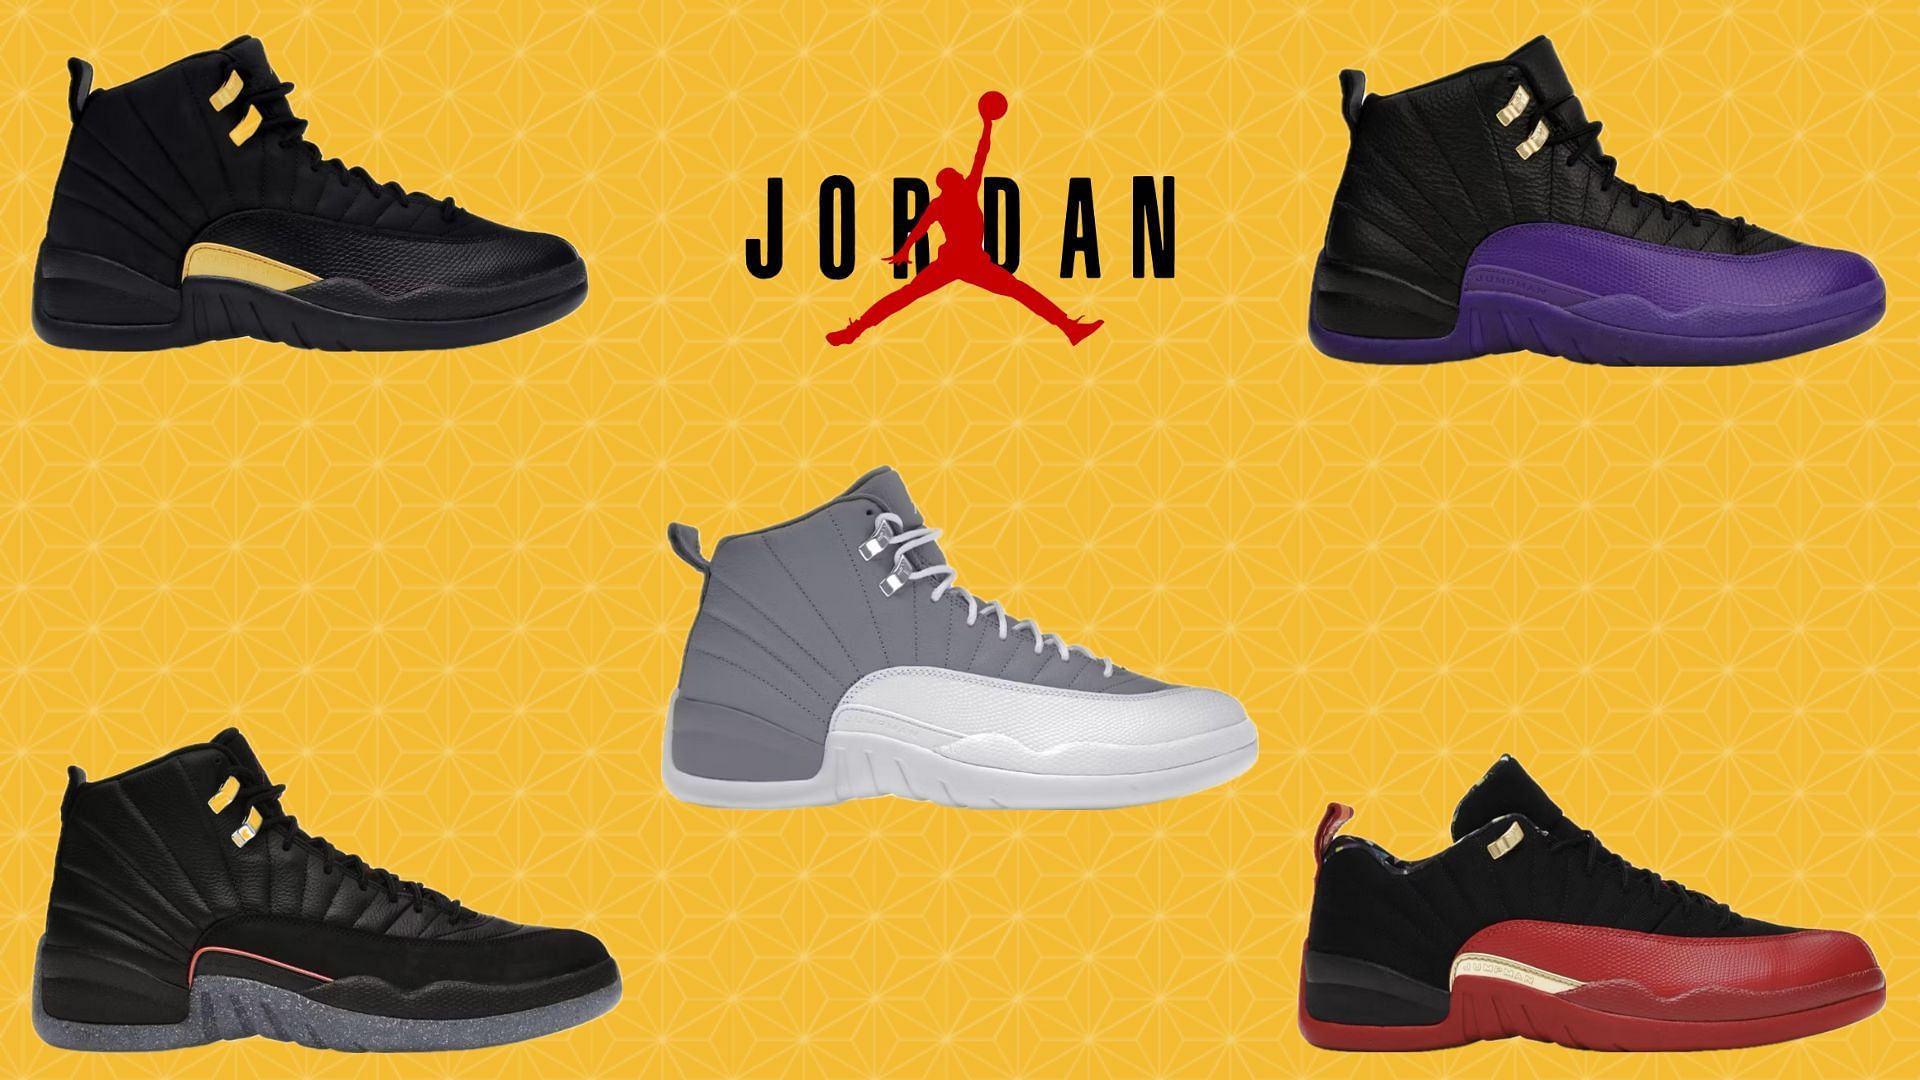 My first pair of Jordans : r/DHgate